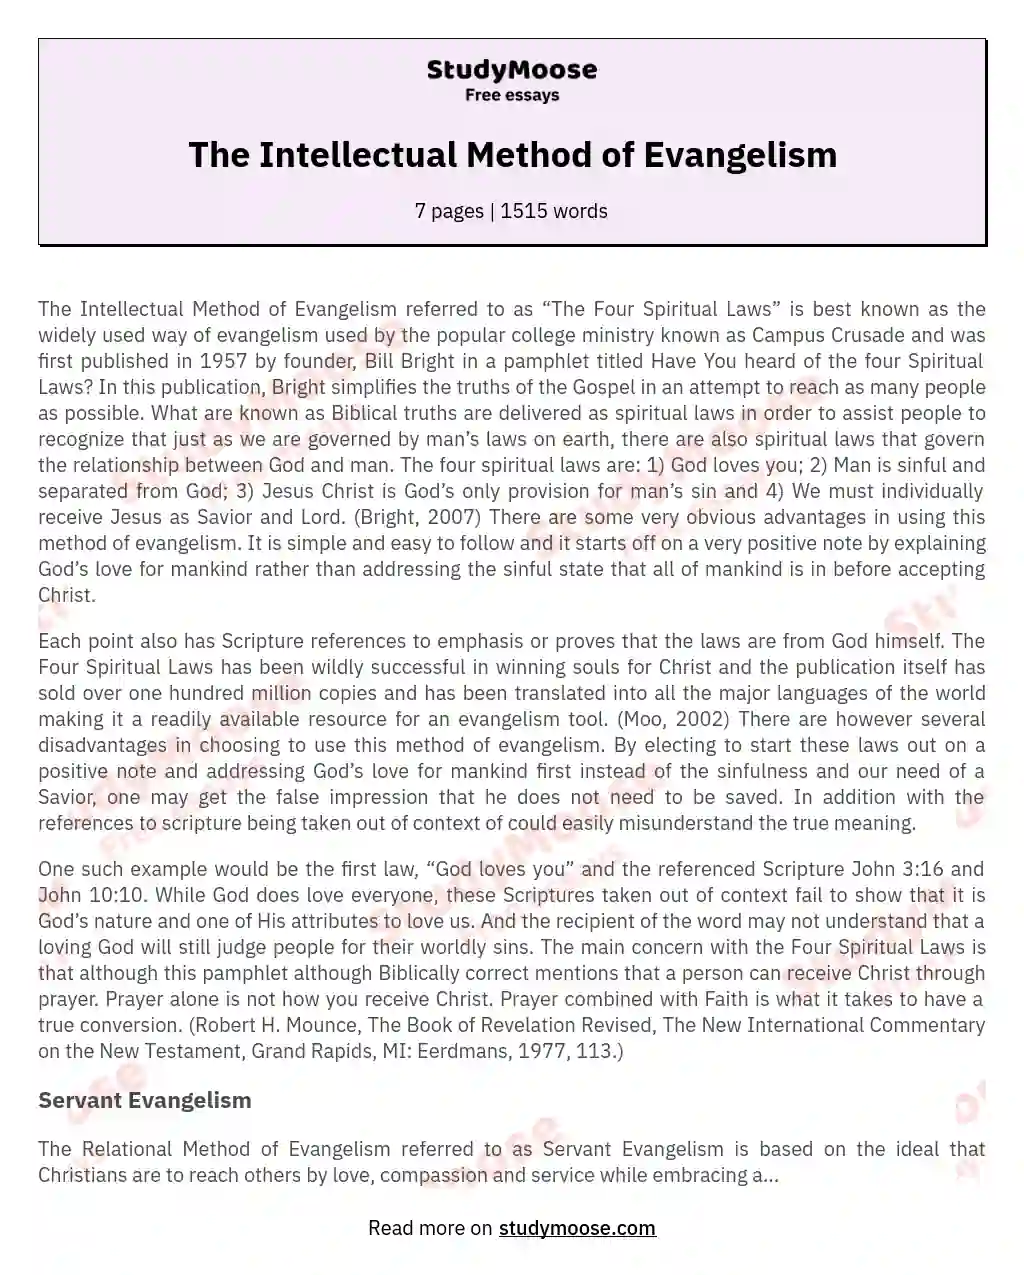 The Intellectual Method of Evangelism essay